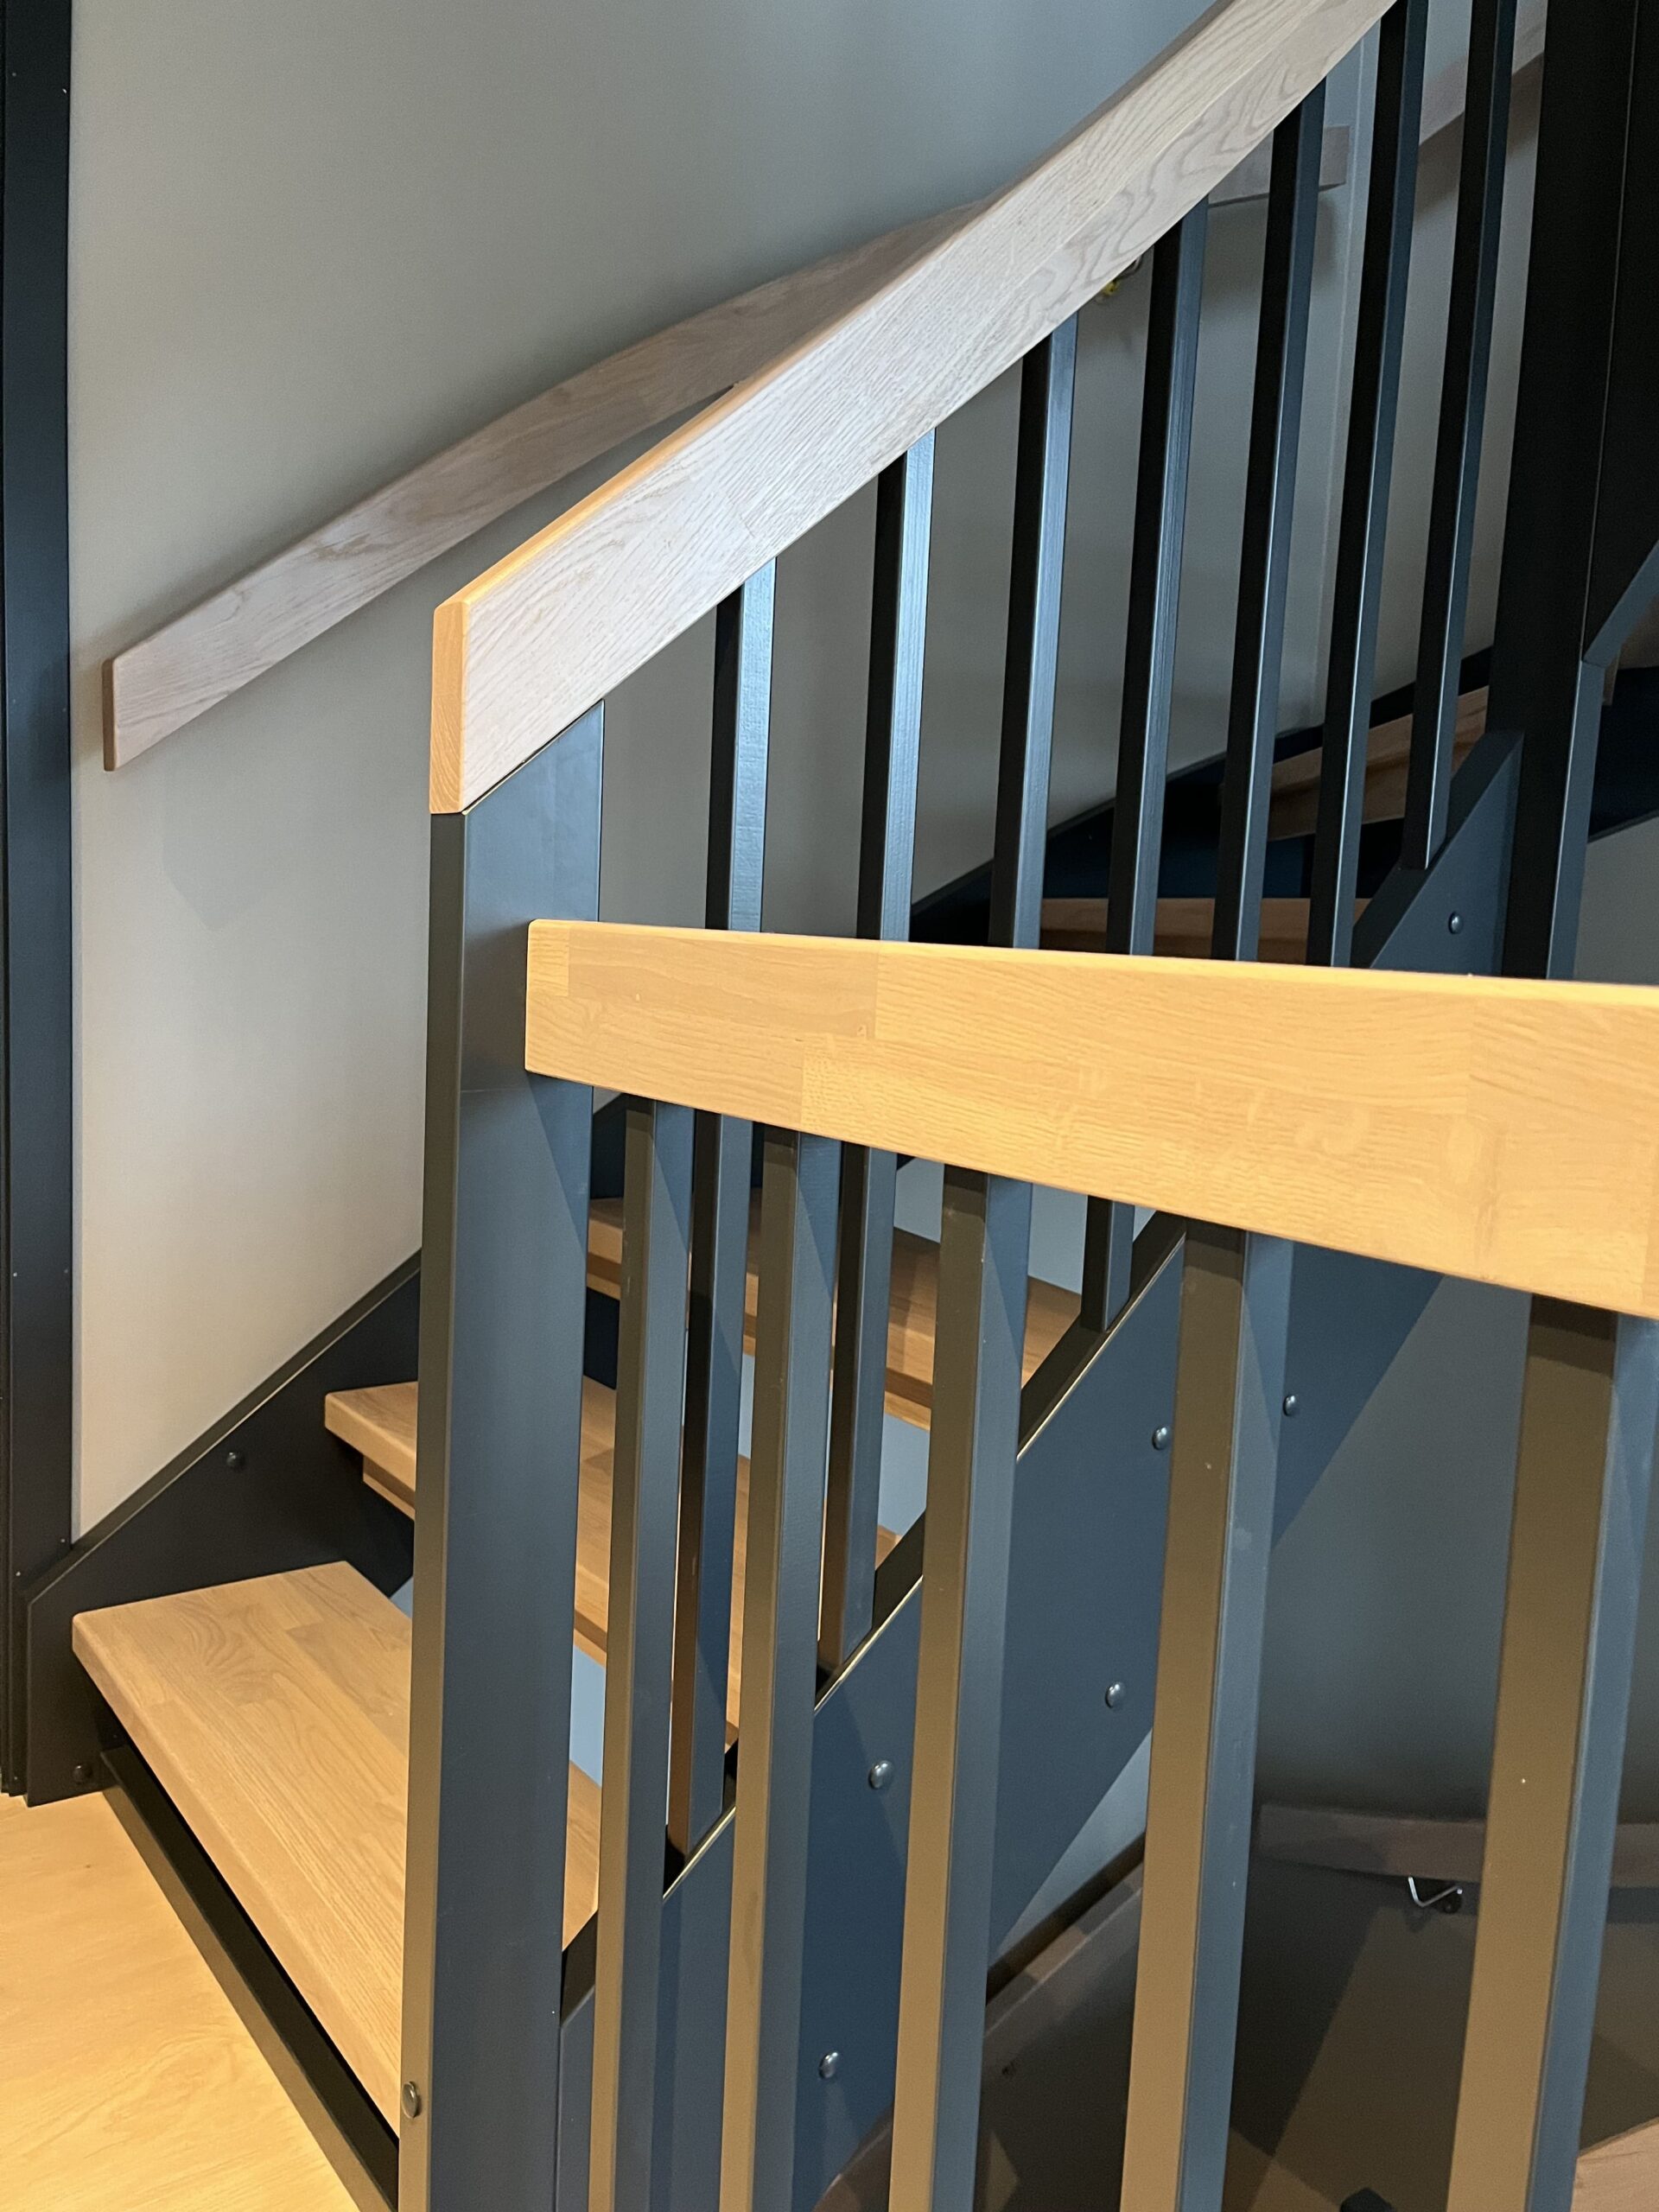 07. Fence oak handrail on a black corner staircase